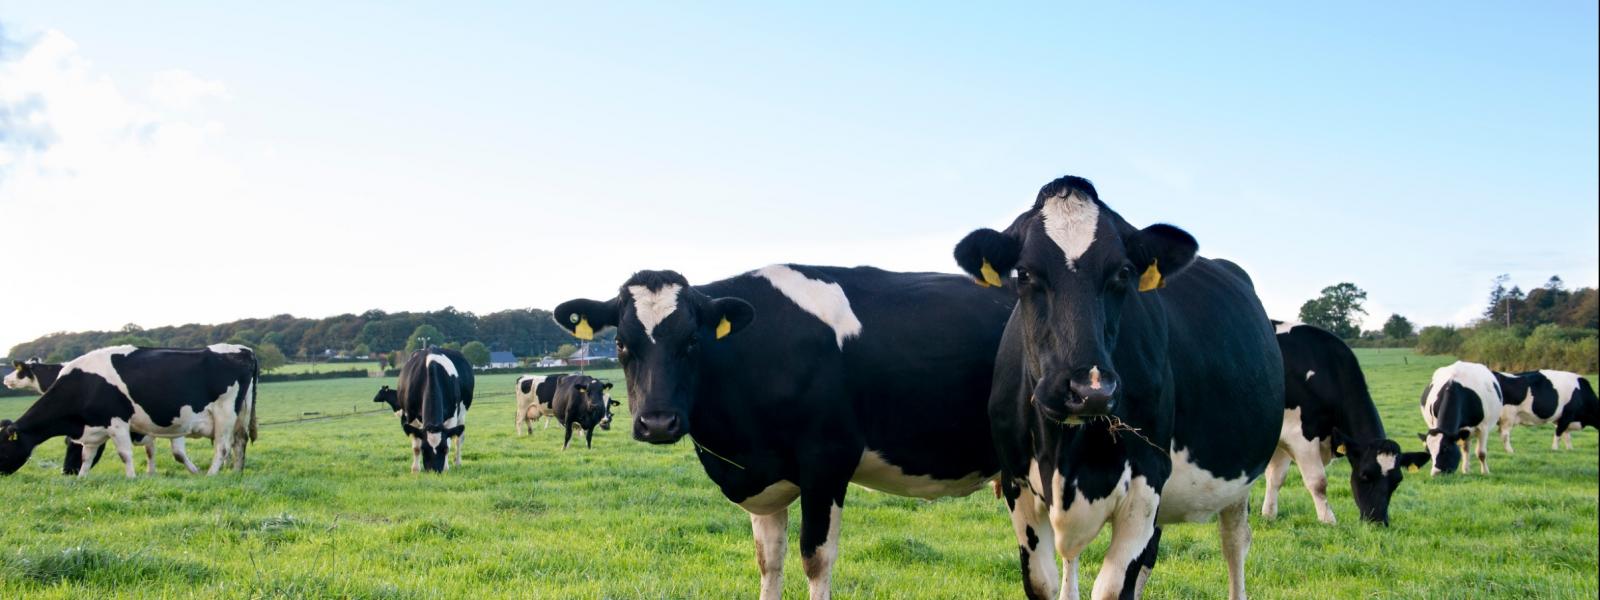 Irish Dairy Cows in a field